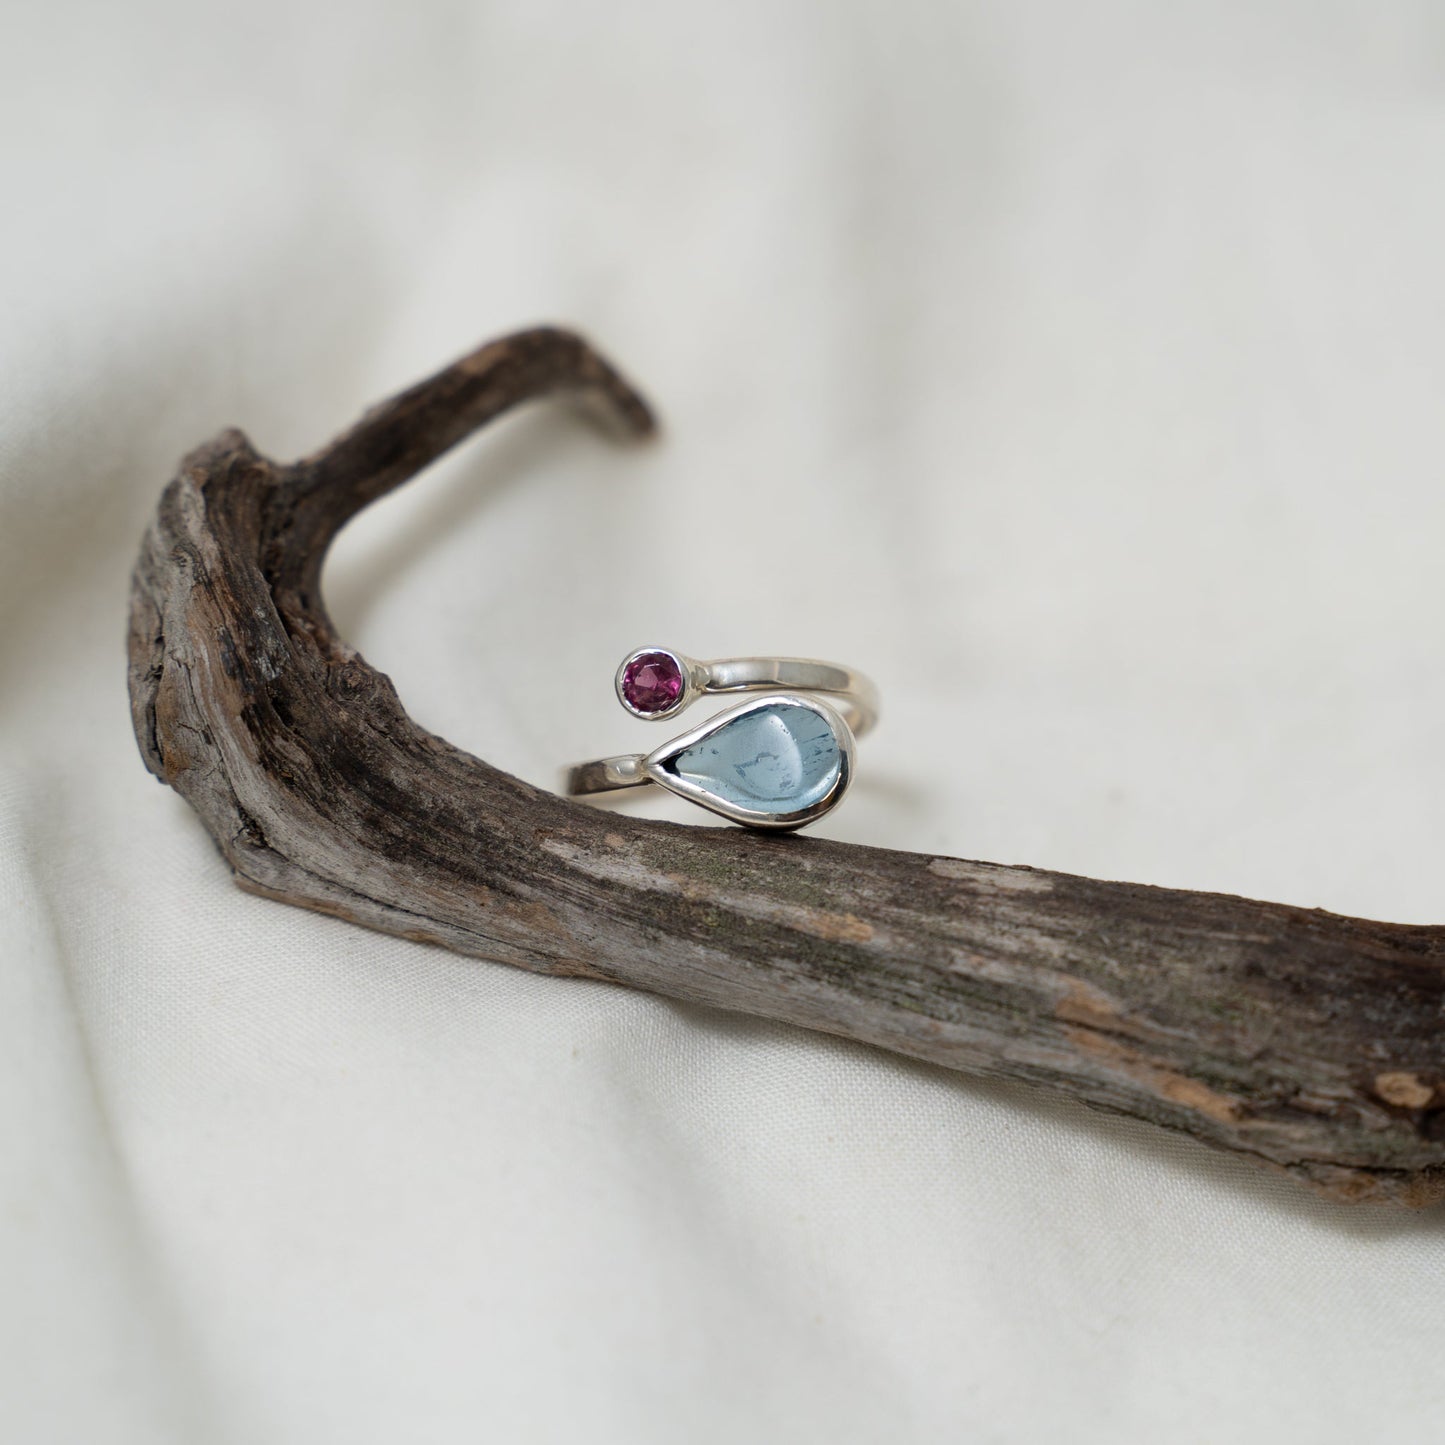 Aquamarine and rhodalite open silver ring